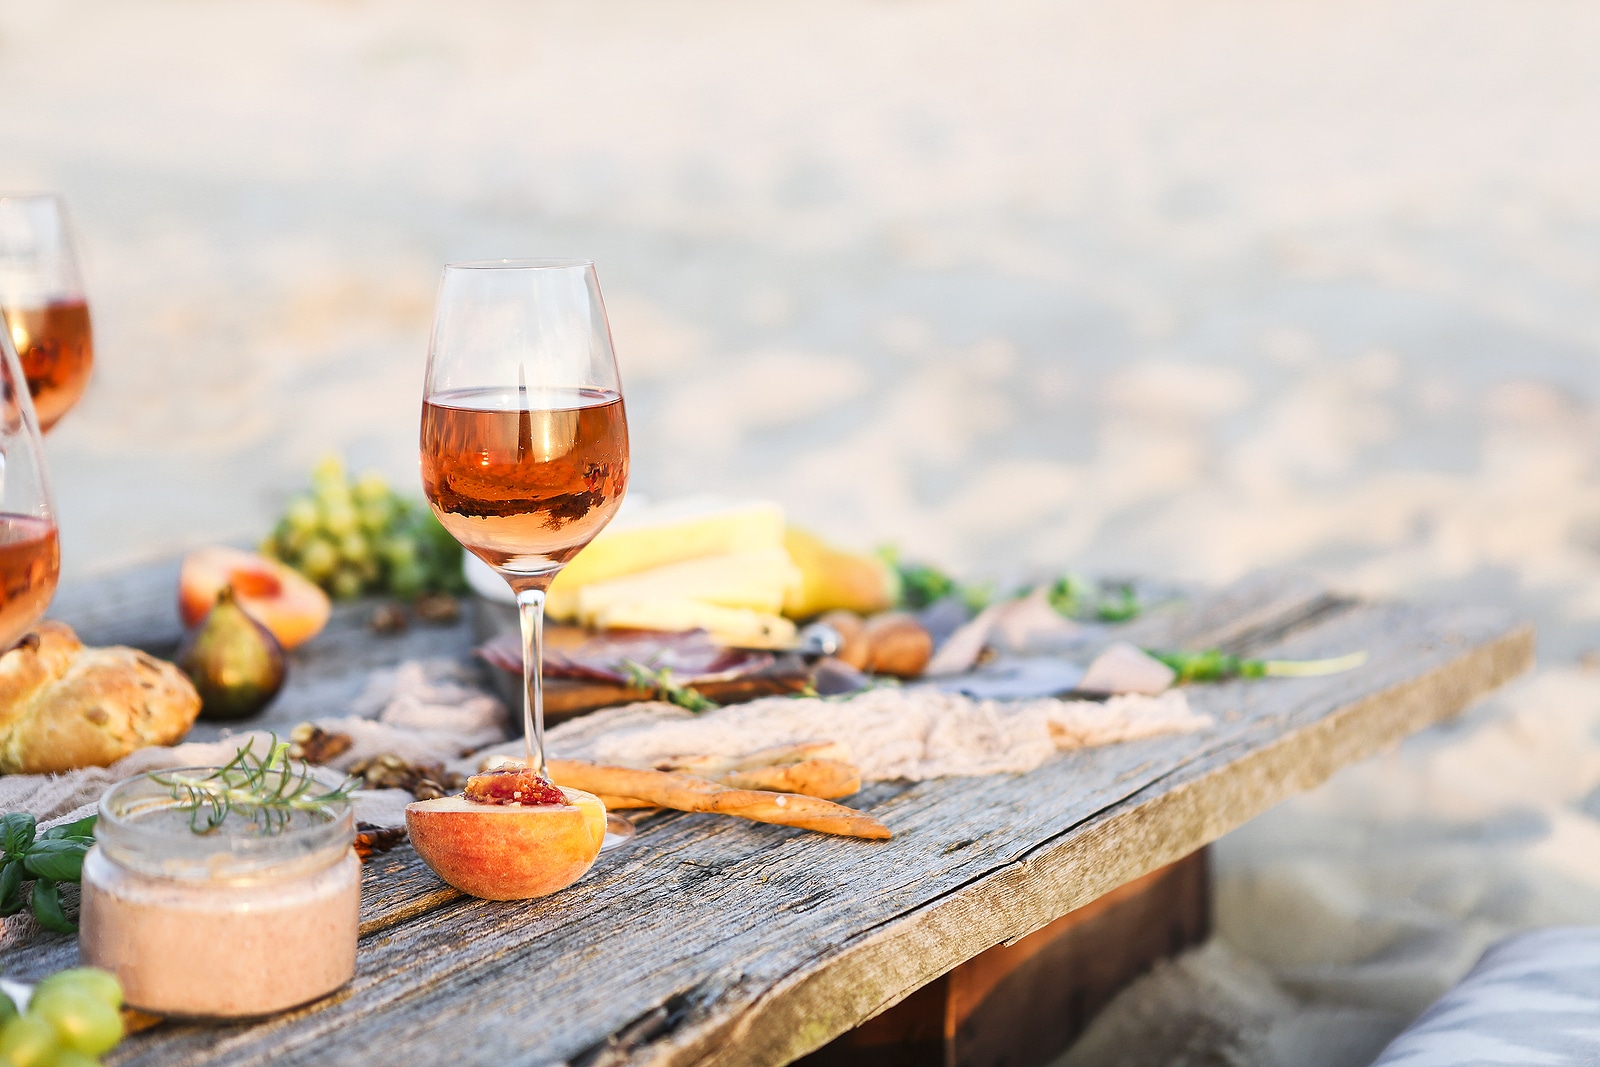 Rose wine at a beach picnic.